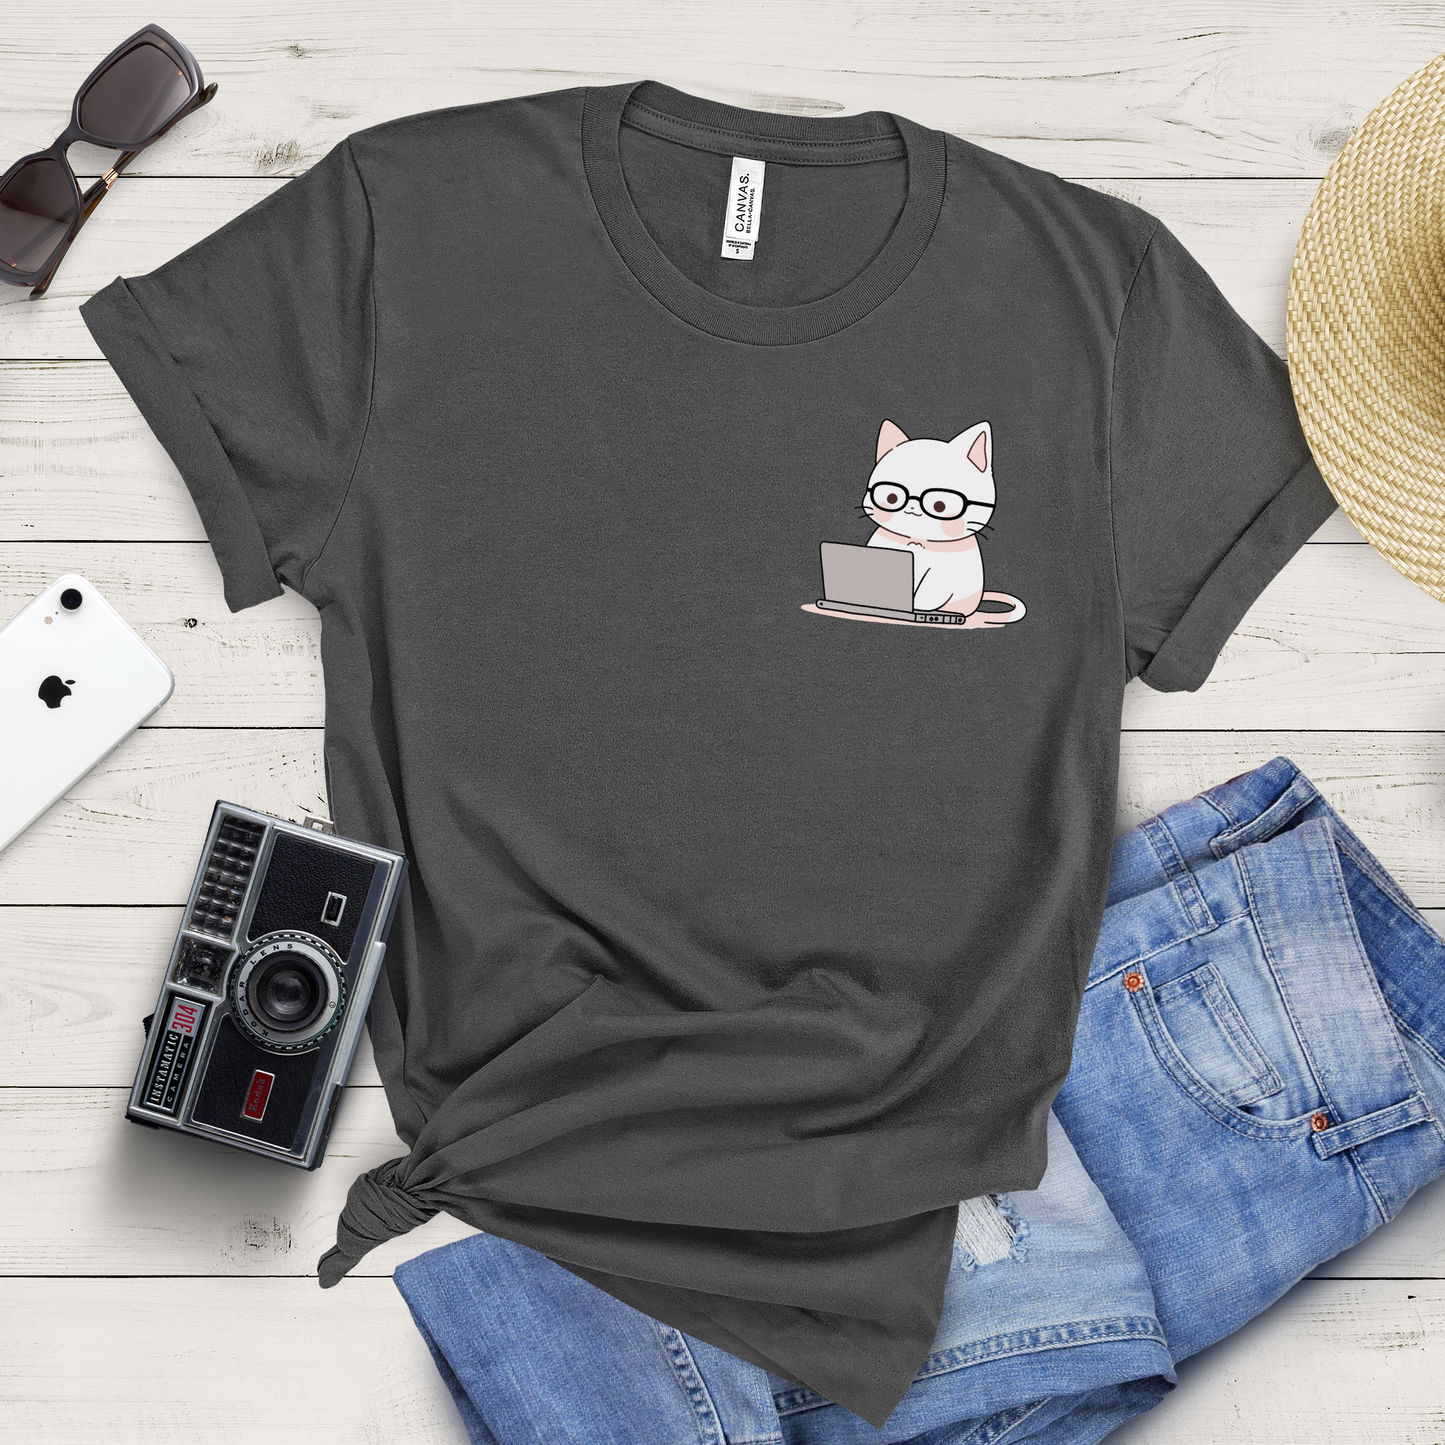 Nerd-Mode Engaged: The Geeky Cat T-Shirt